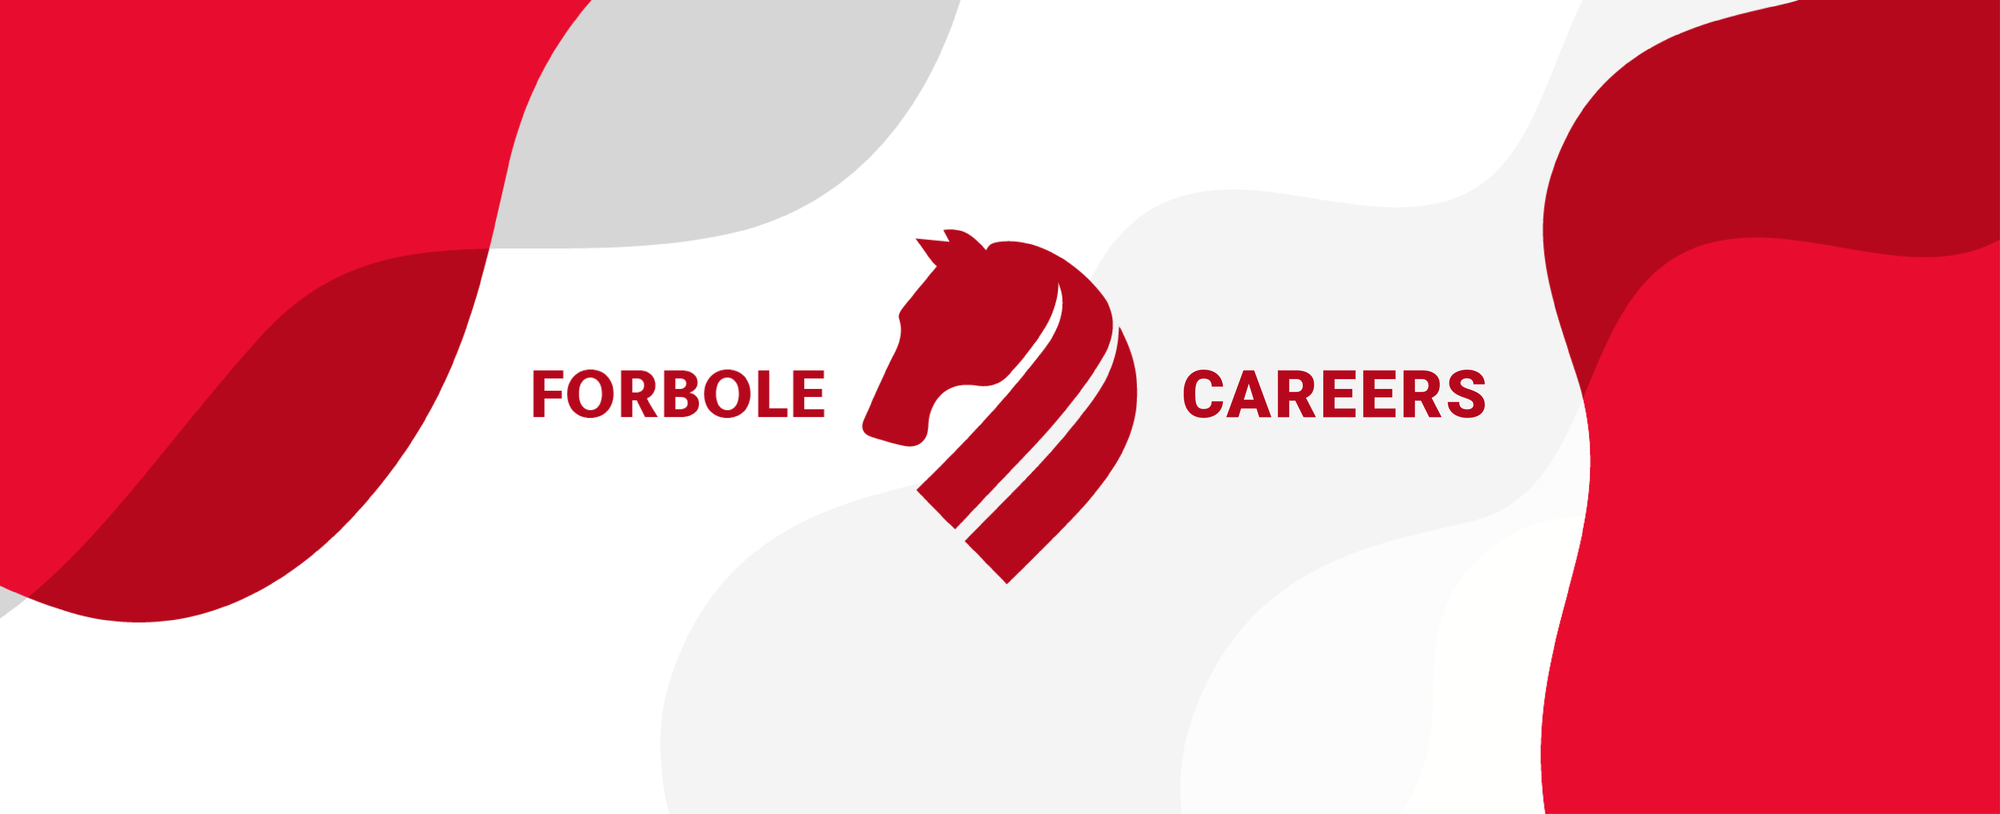 Forbole - Career Opportunities